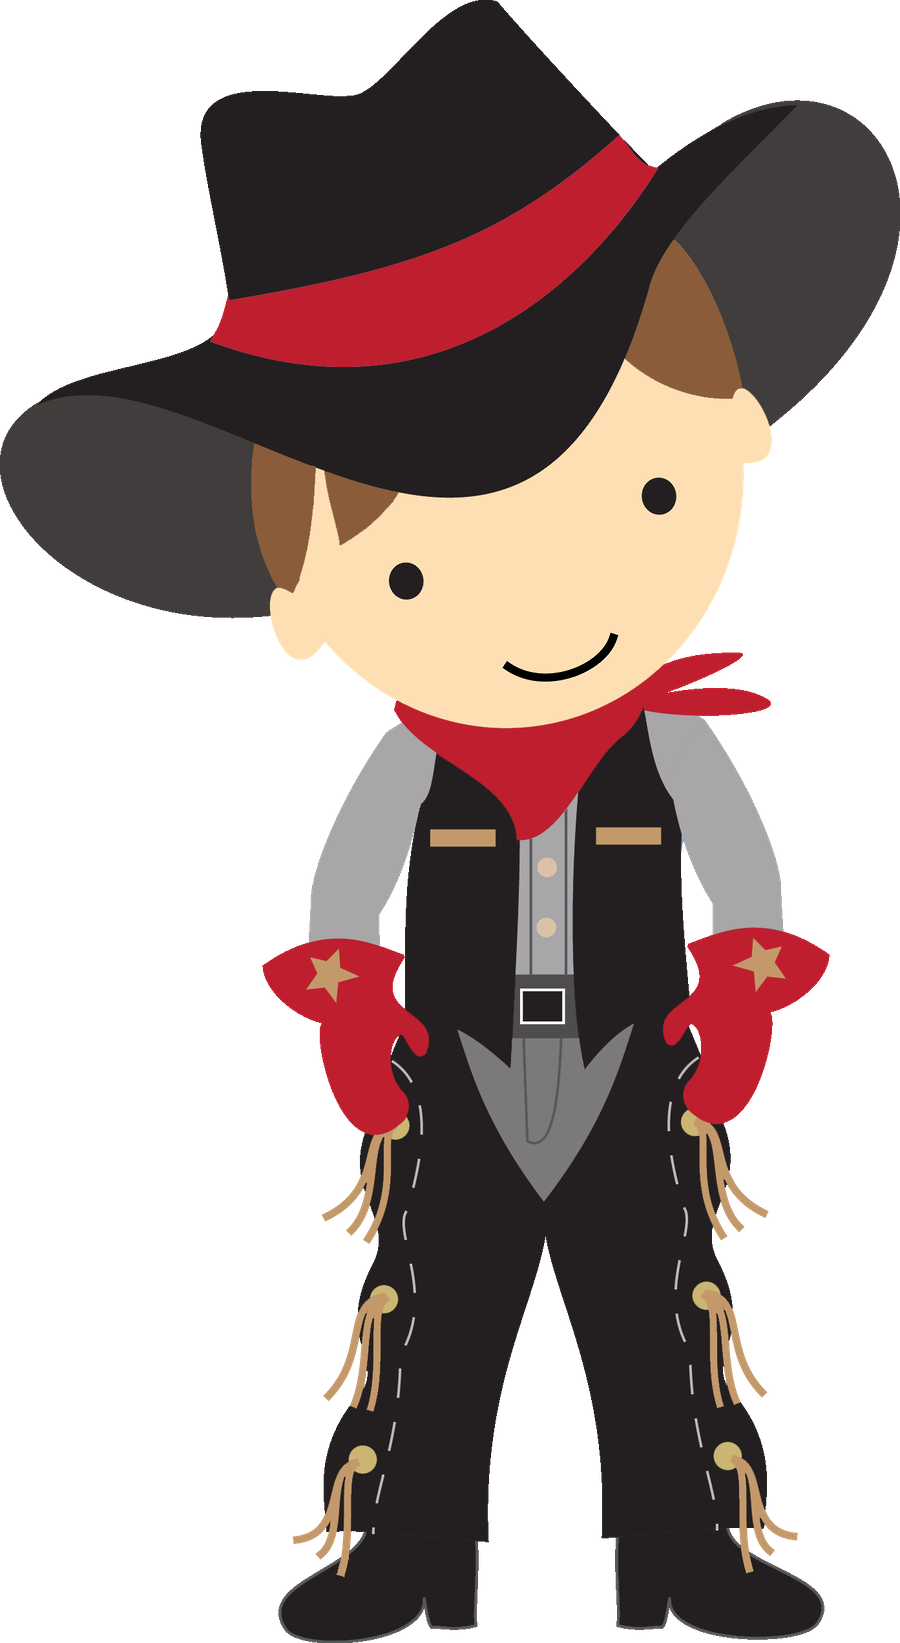 A Cartoon Of A Cowboy